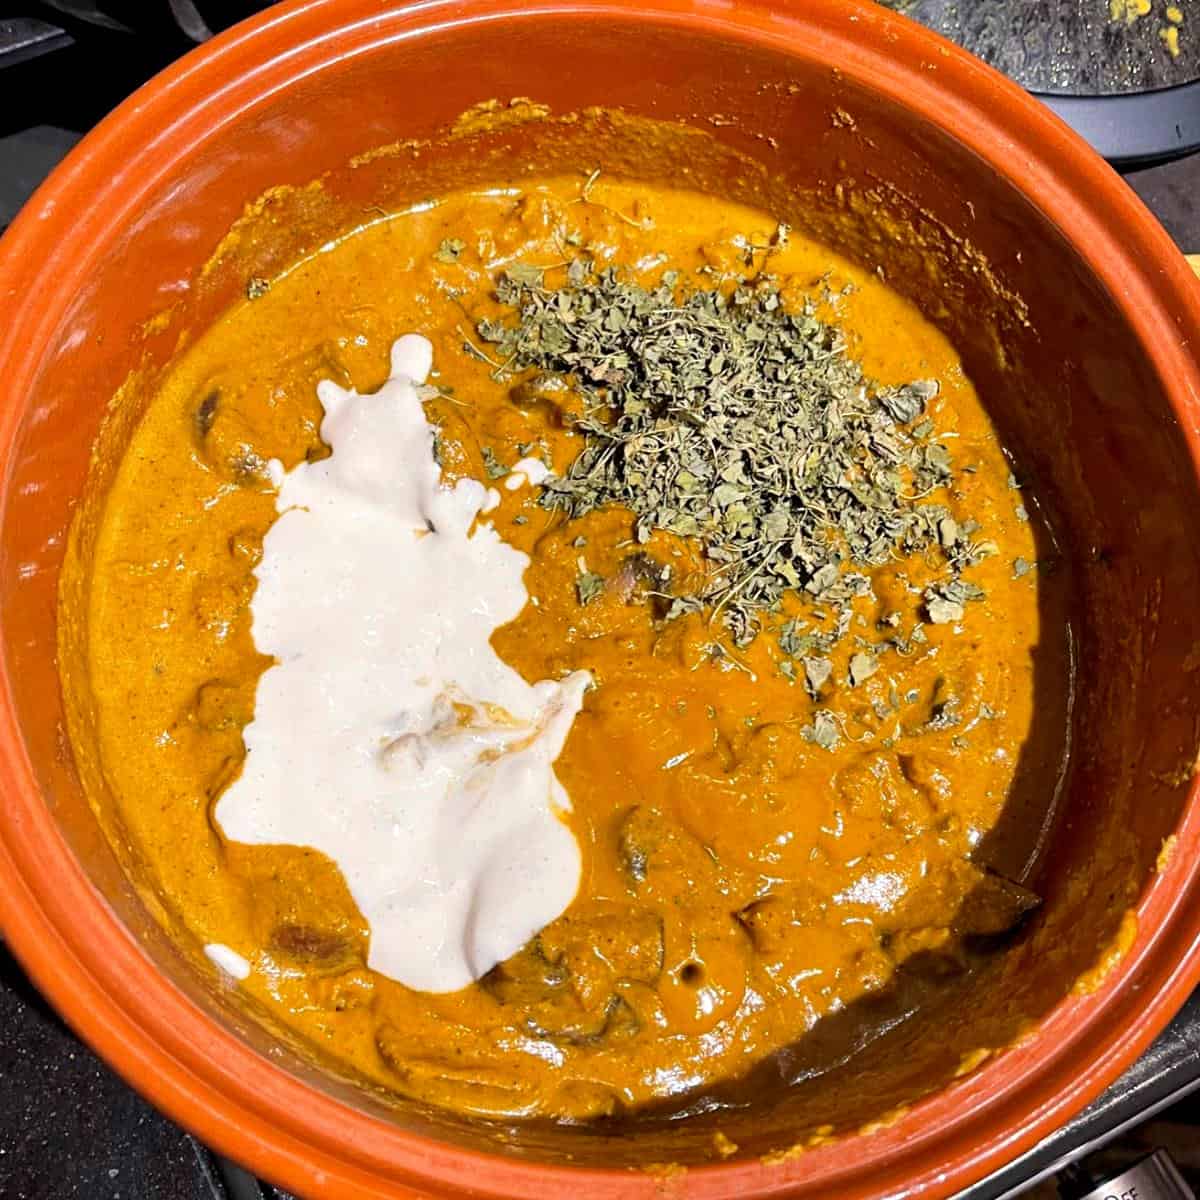 Coconut milk and kasoori methi added to seitan curry.